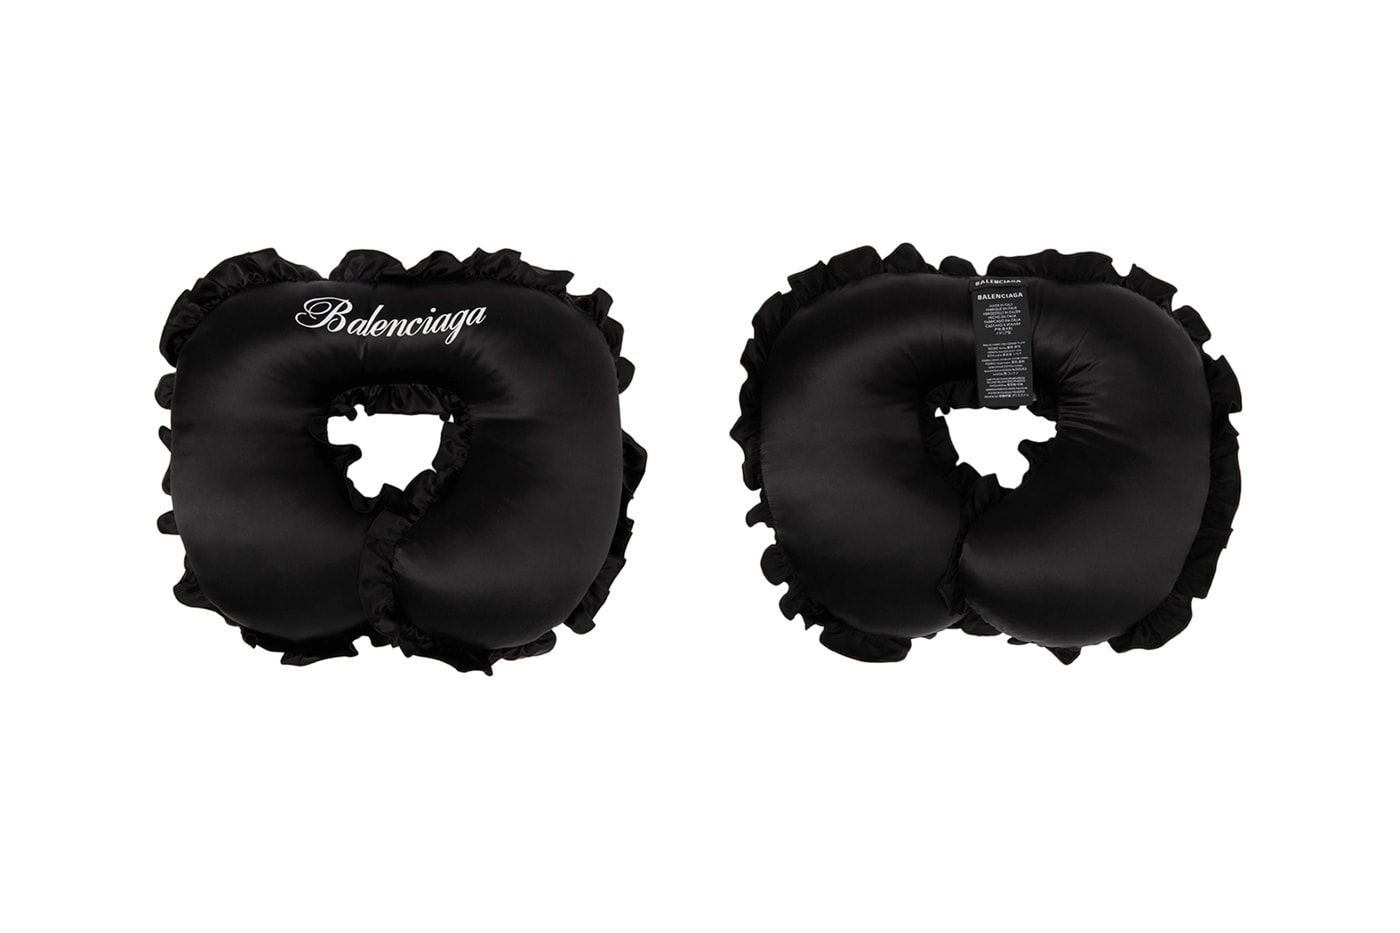 Balenciaga Black Silk Eye Mask Travel Pillow Release SSENSE Info Buy Price